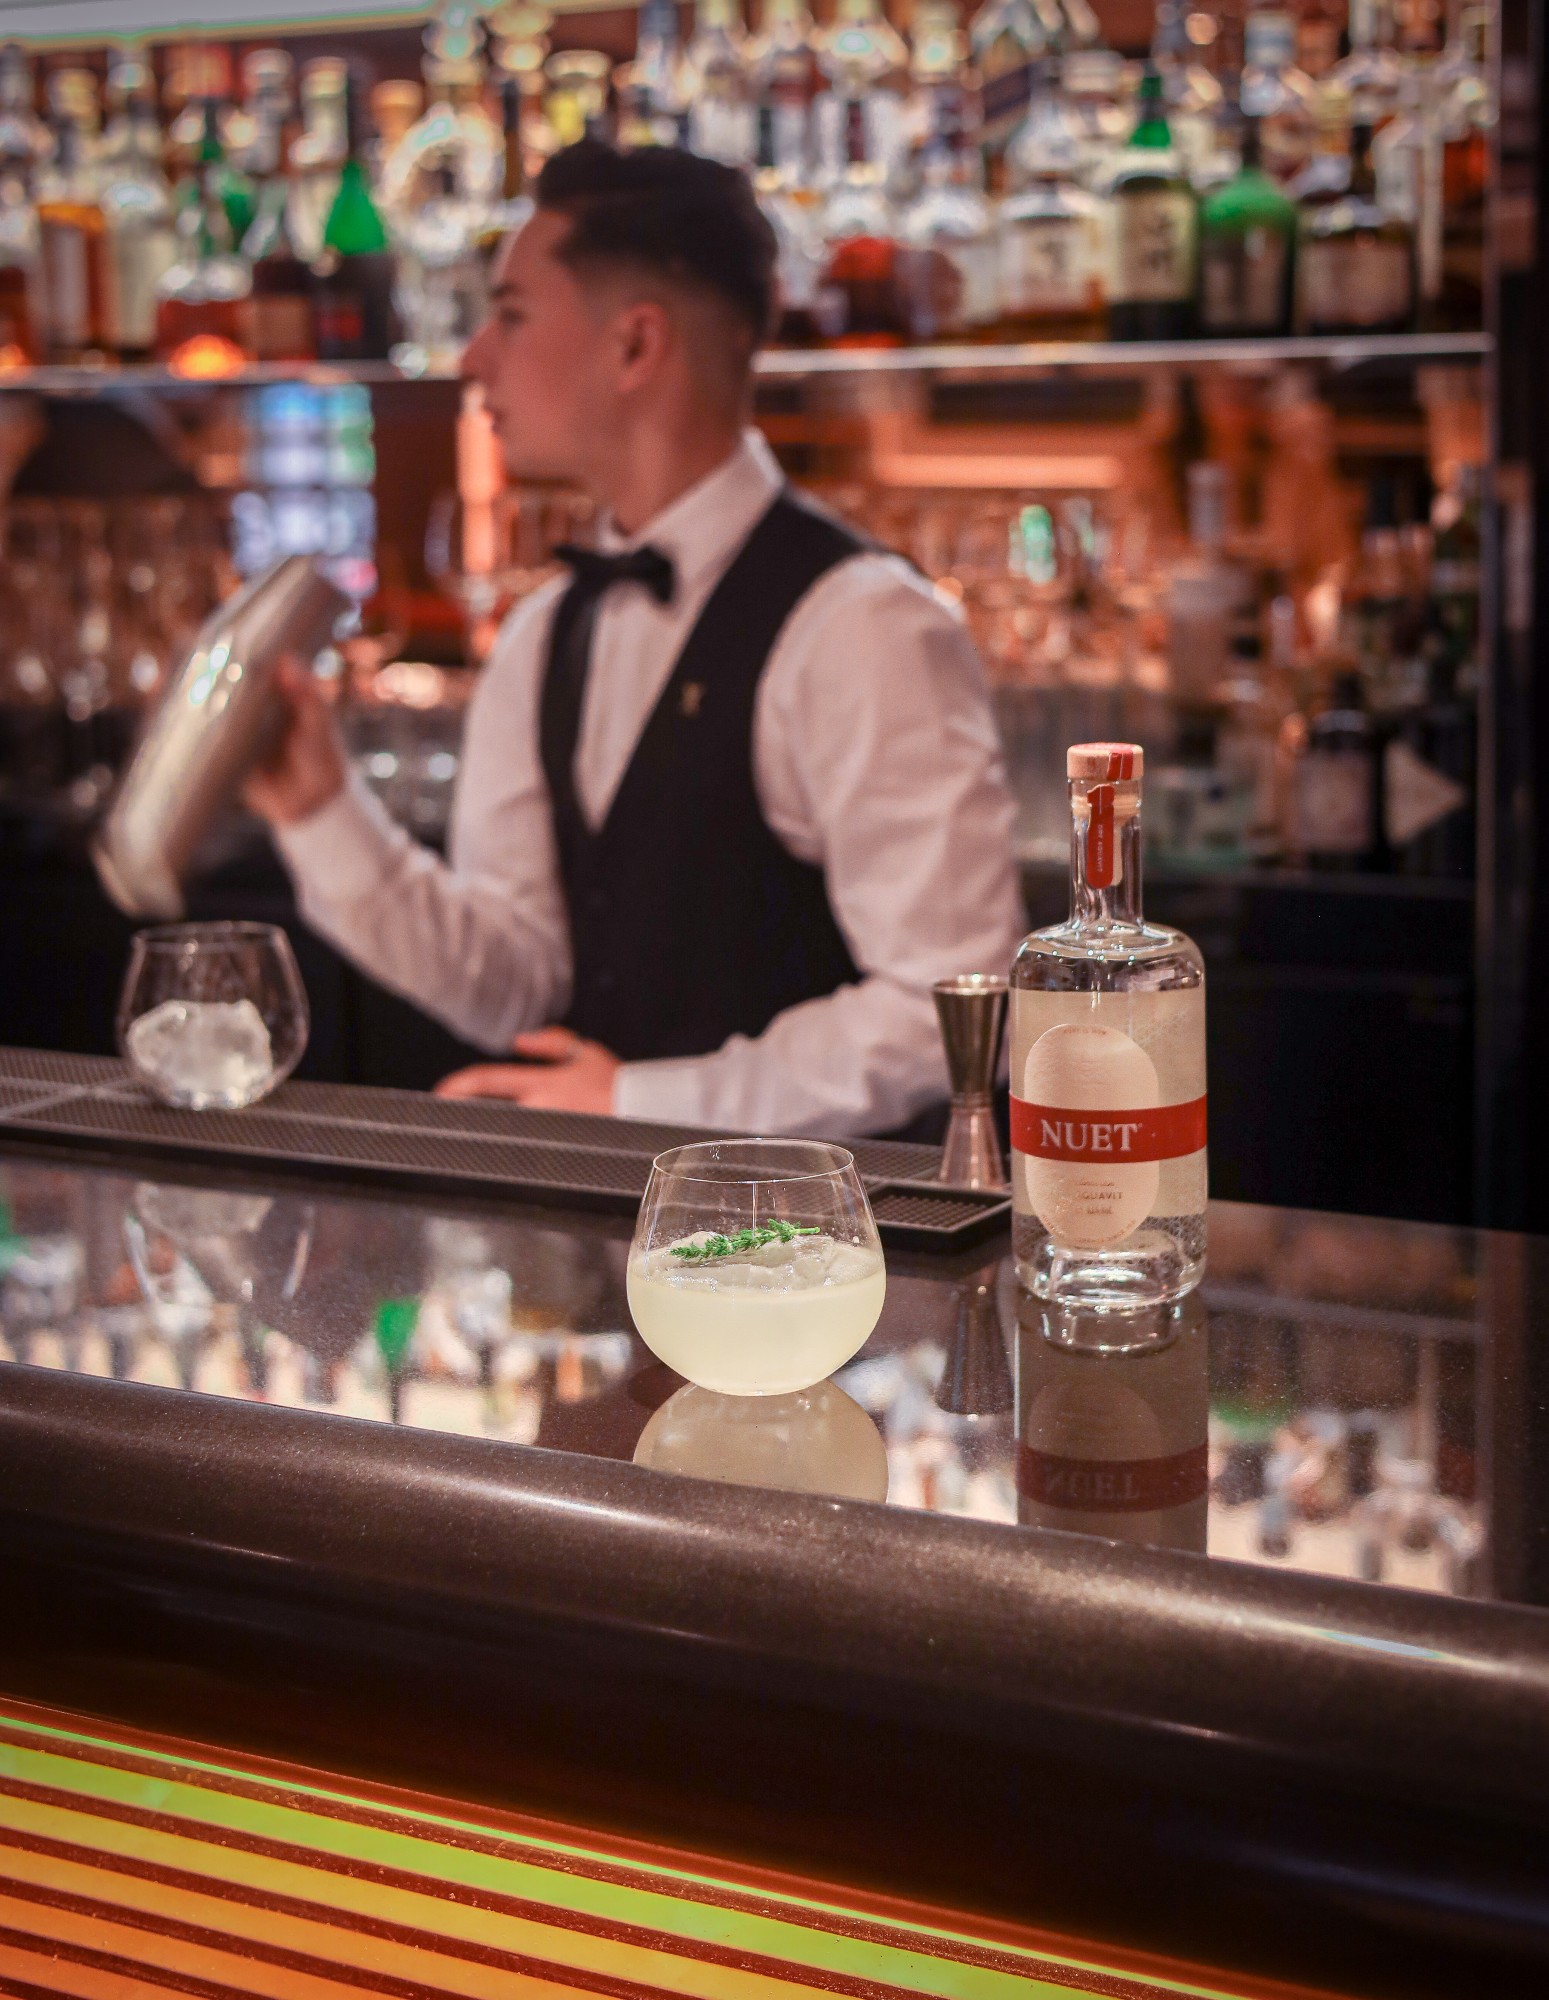 Bar 45 on Park Lane is offering Nuet Dry Aquavit cocktails